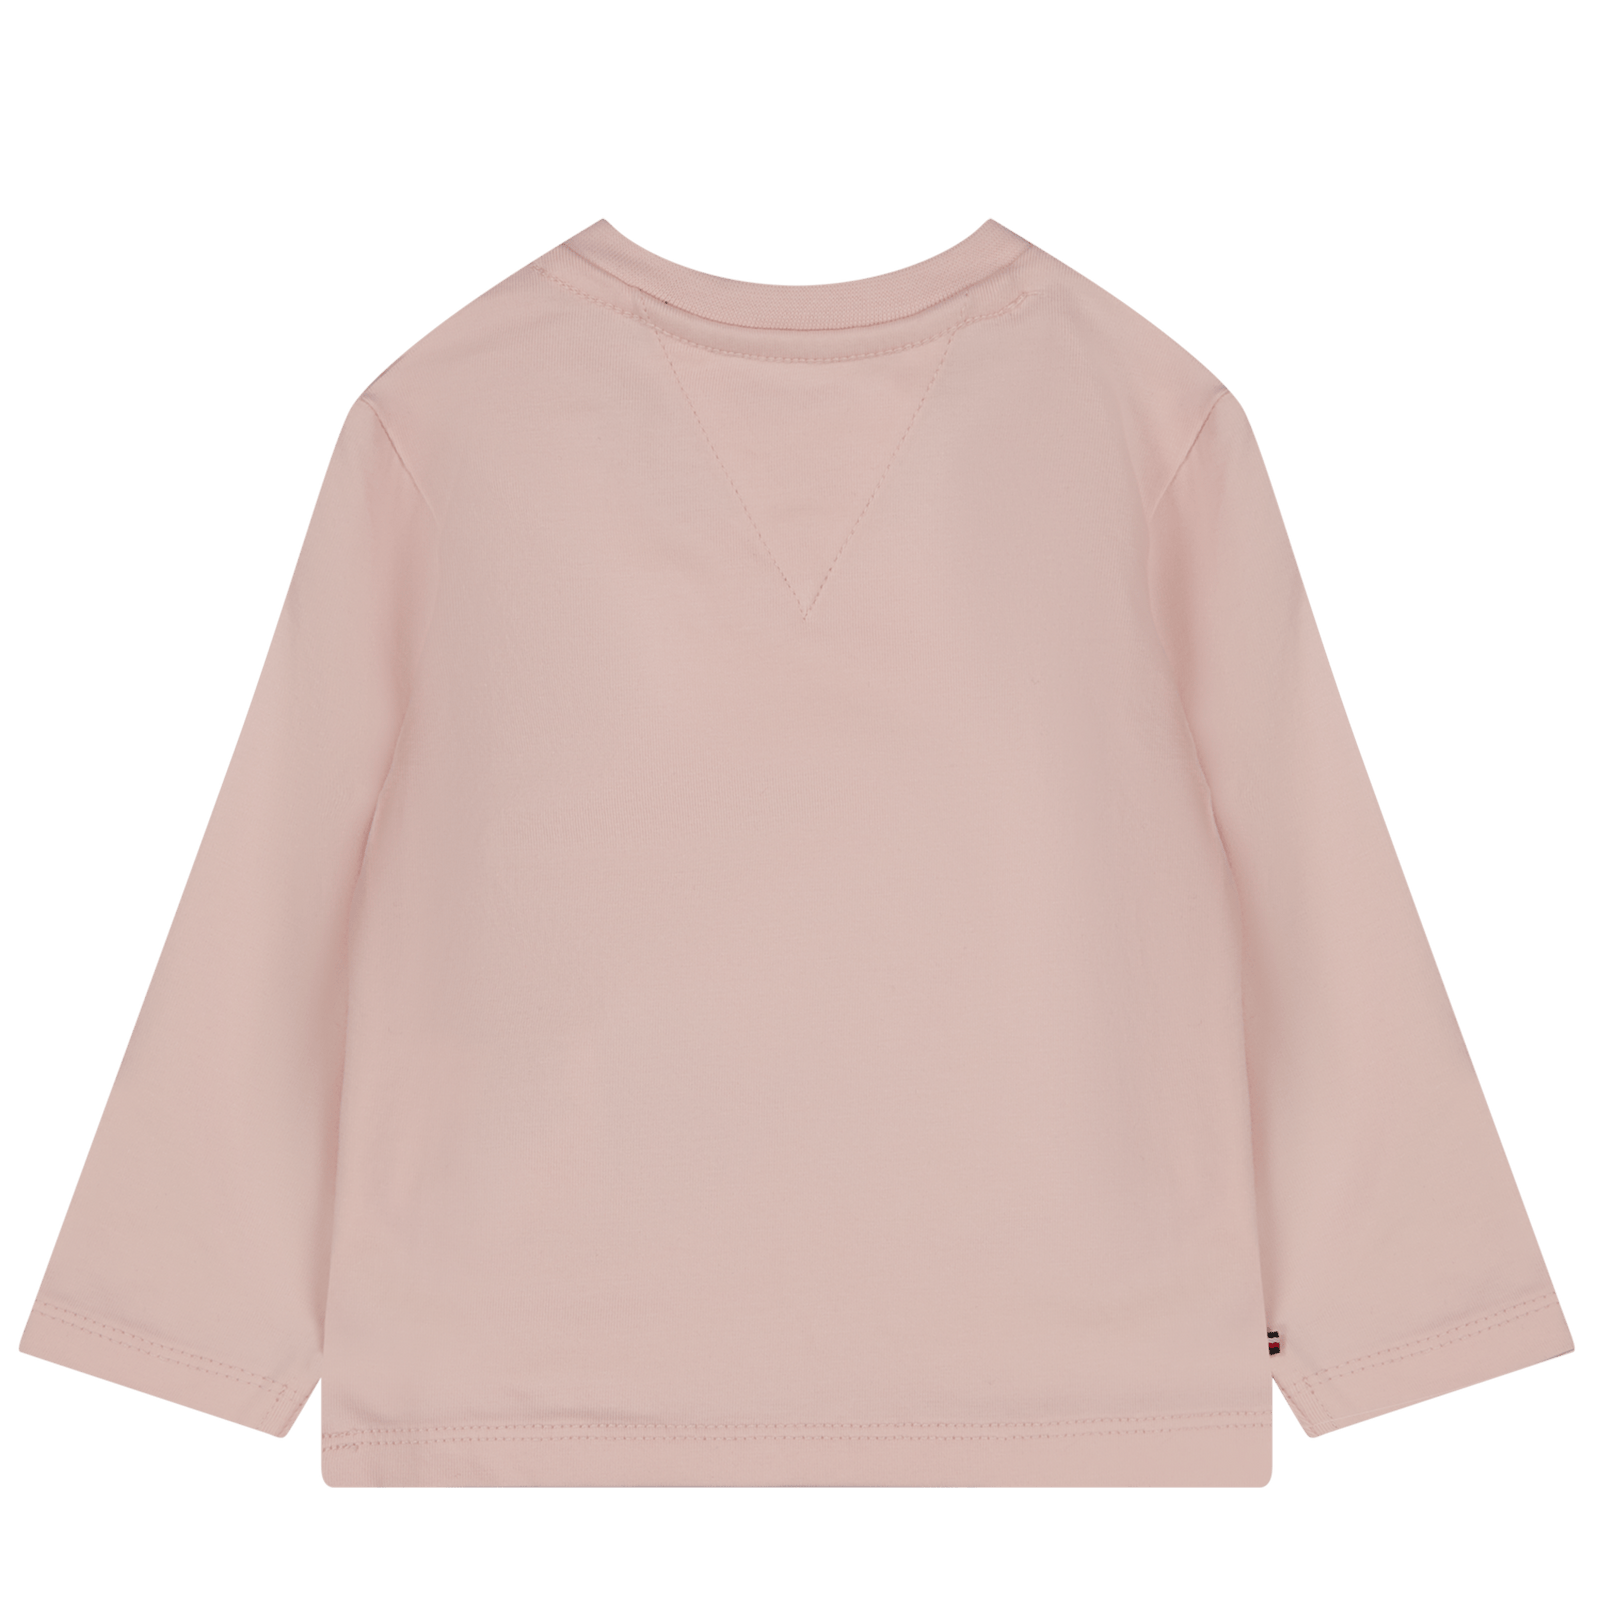 Tommy Hilfiger Baby Meisjes T-Shirt Licht Roze 62